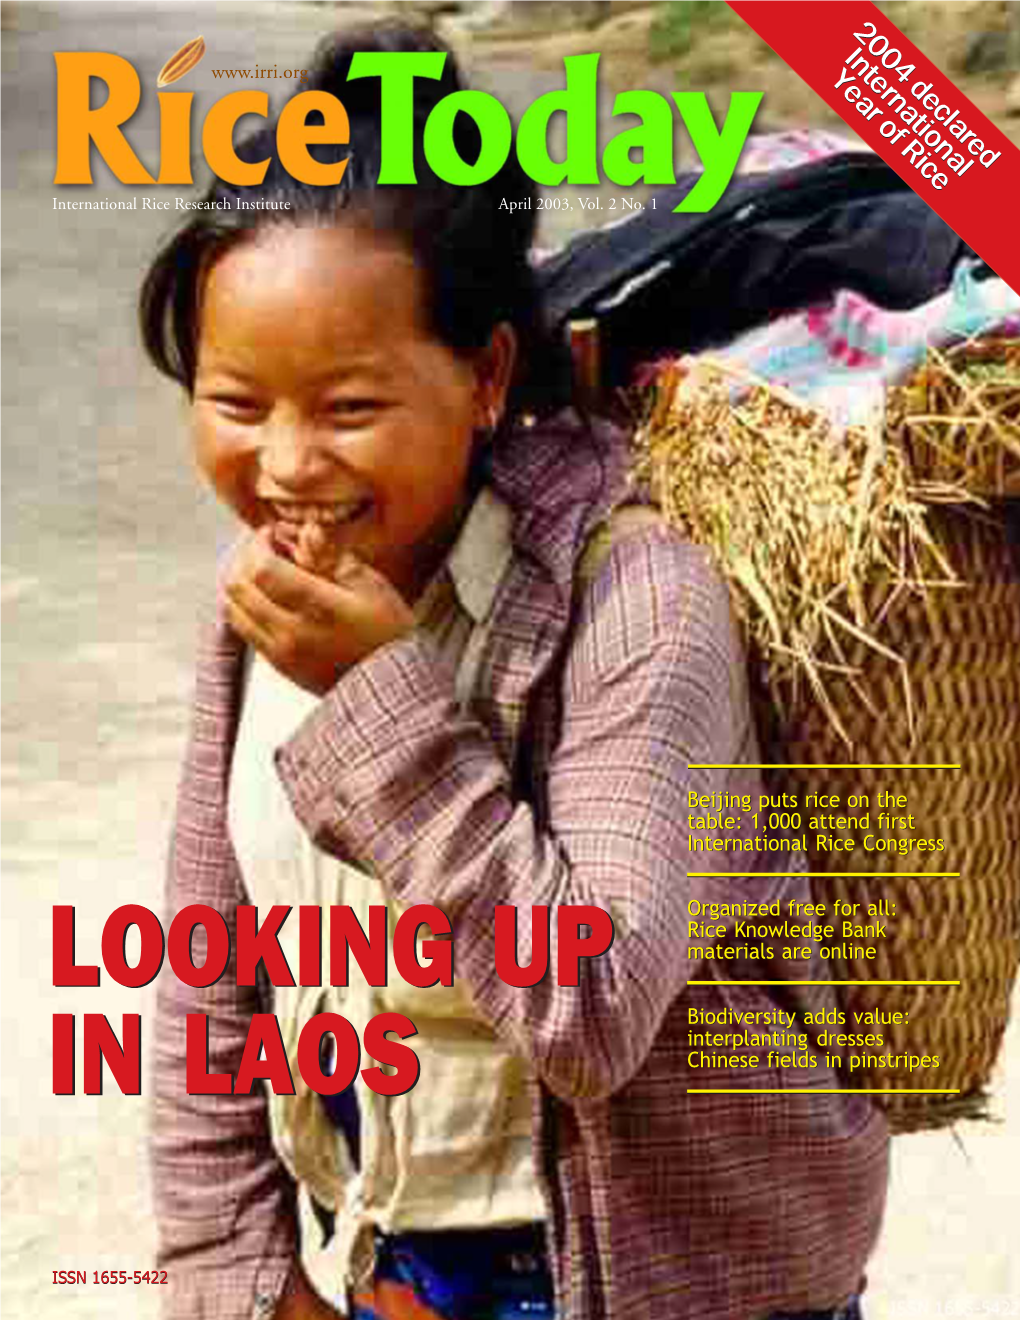 2004 Declared International Year of Rice 2004 Declared International